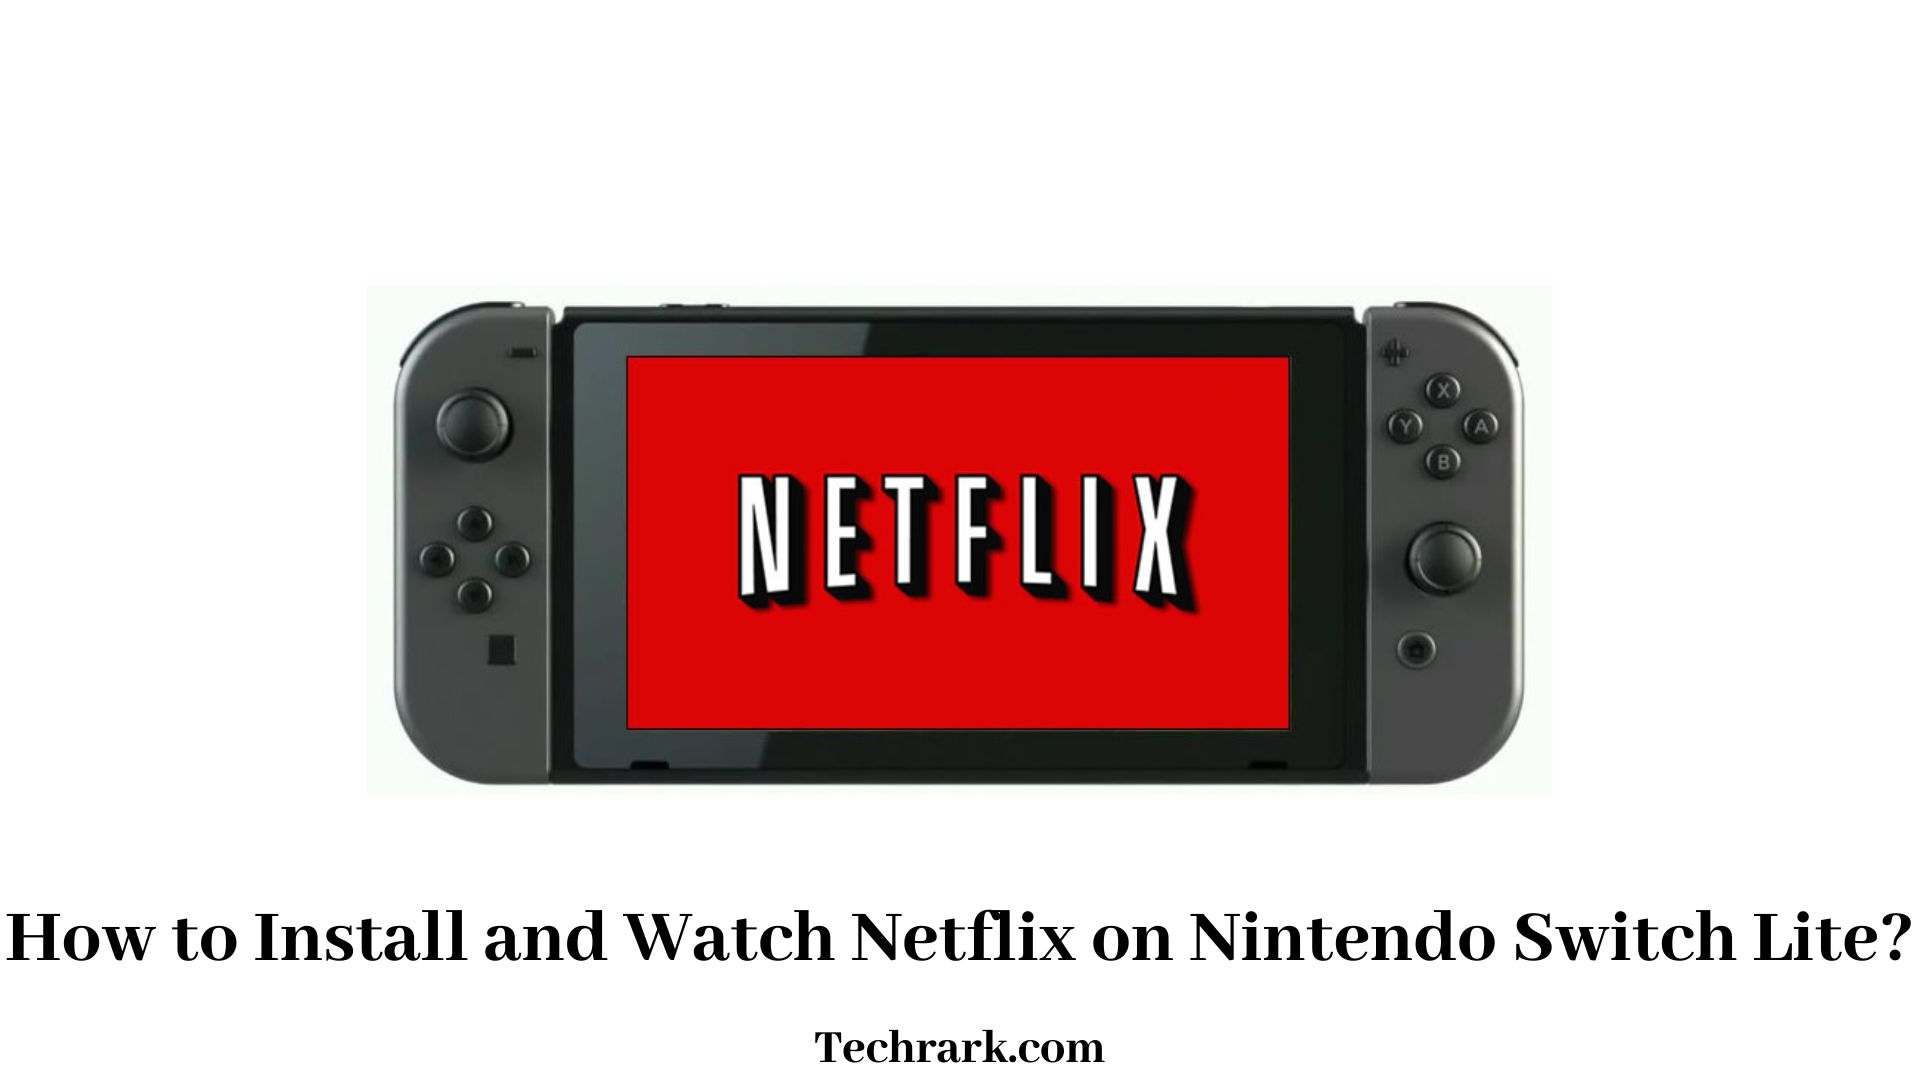 Netflix on Nintendo Switch Lite